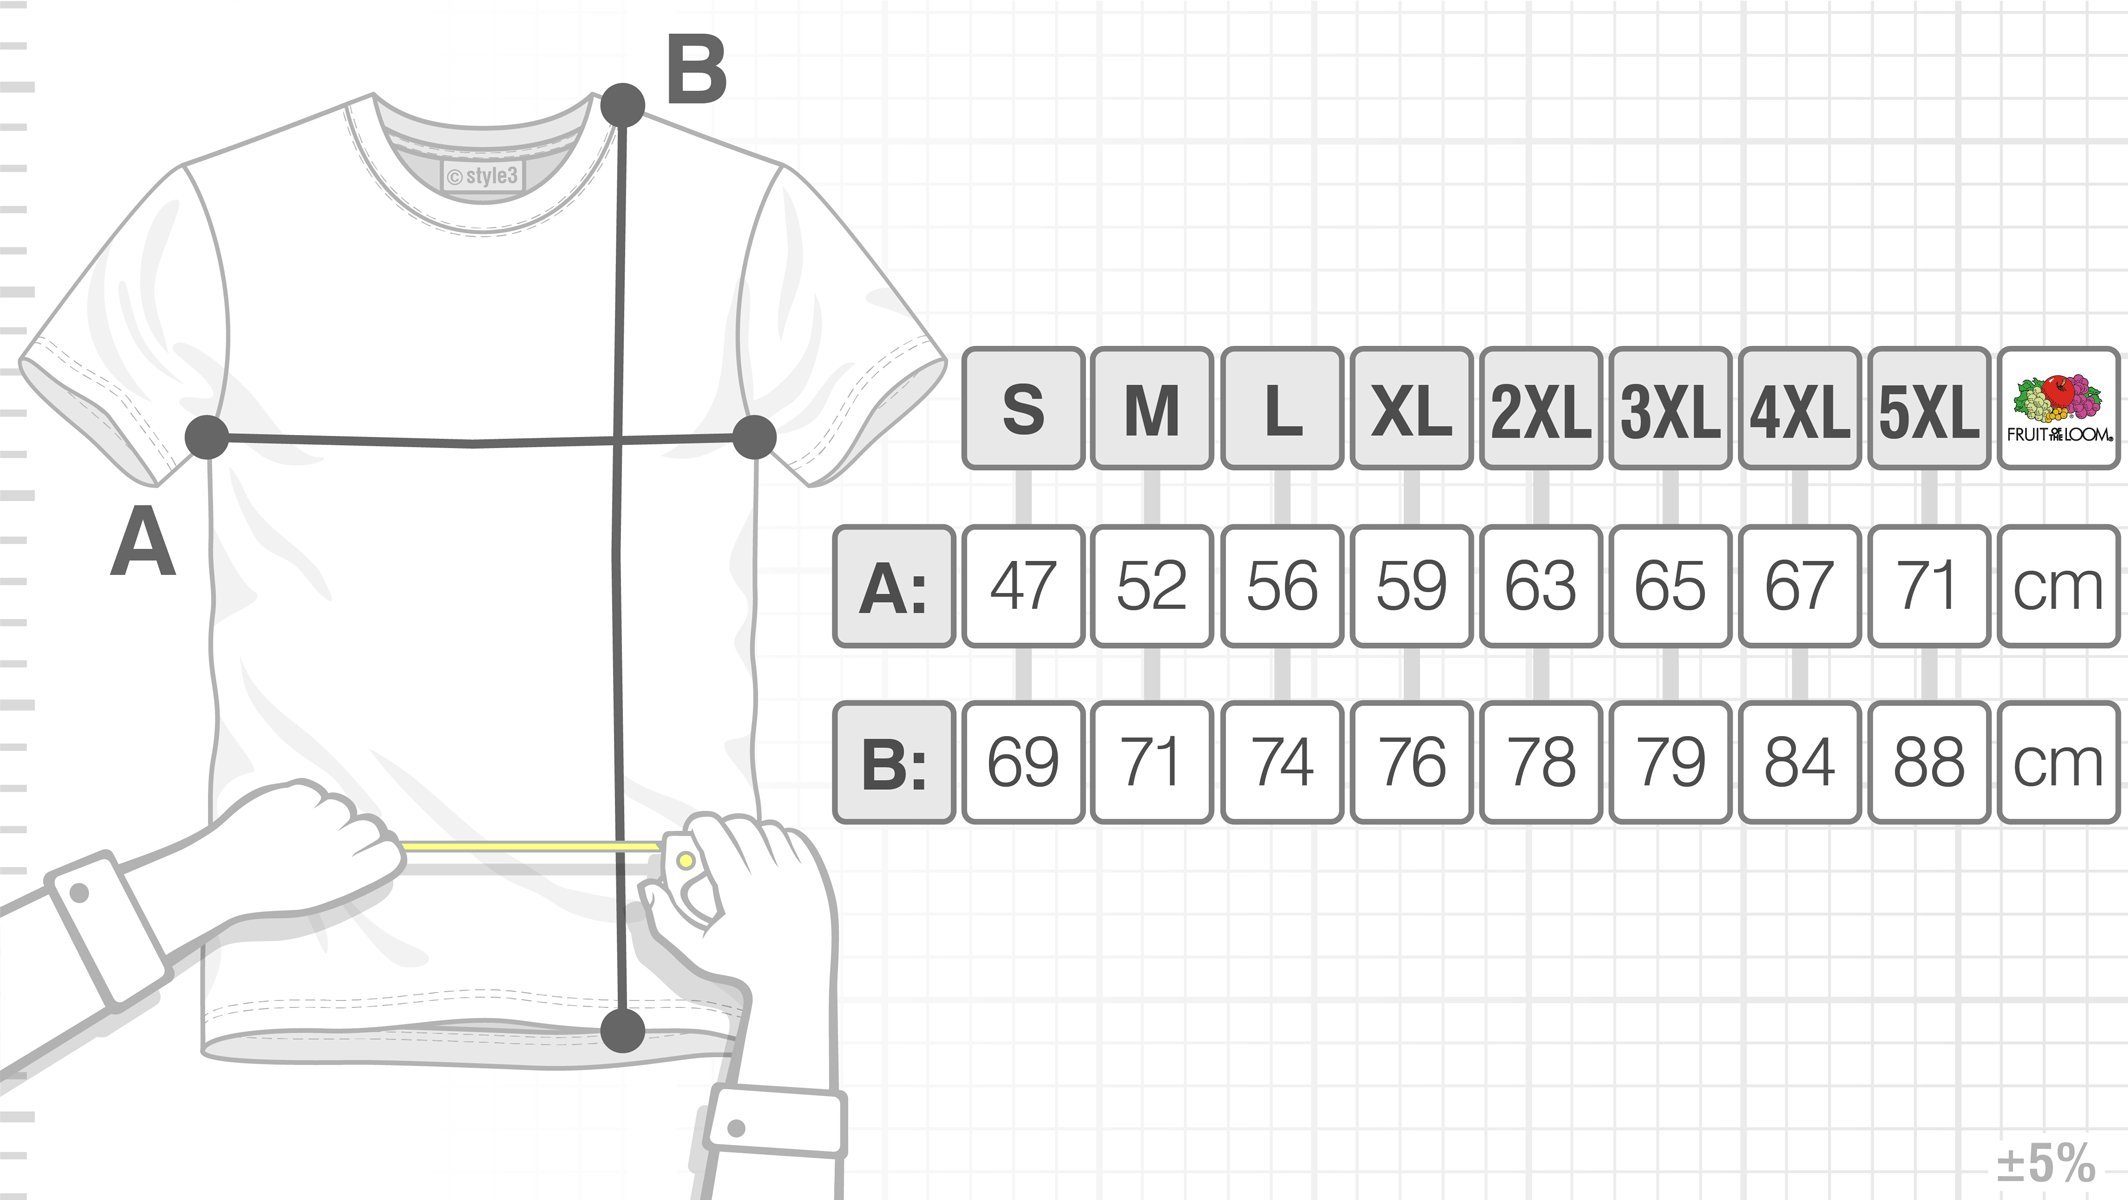 Herren Bang T-Shirt Theory Penrose style3 Escher Big Sheldon lila Dreieck Würfel Print-Shirt Cube Cooper